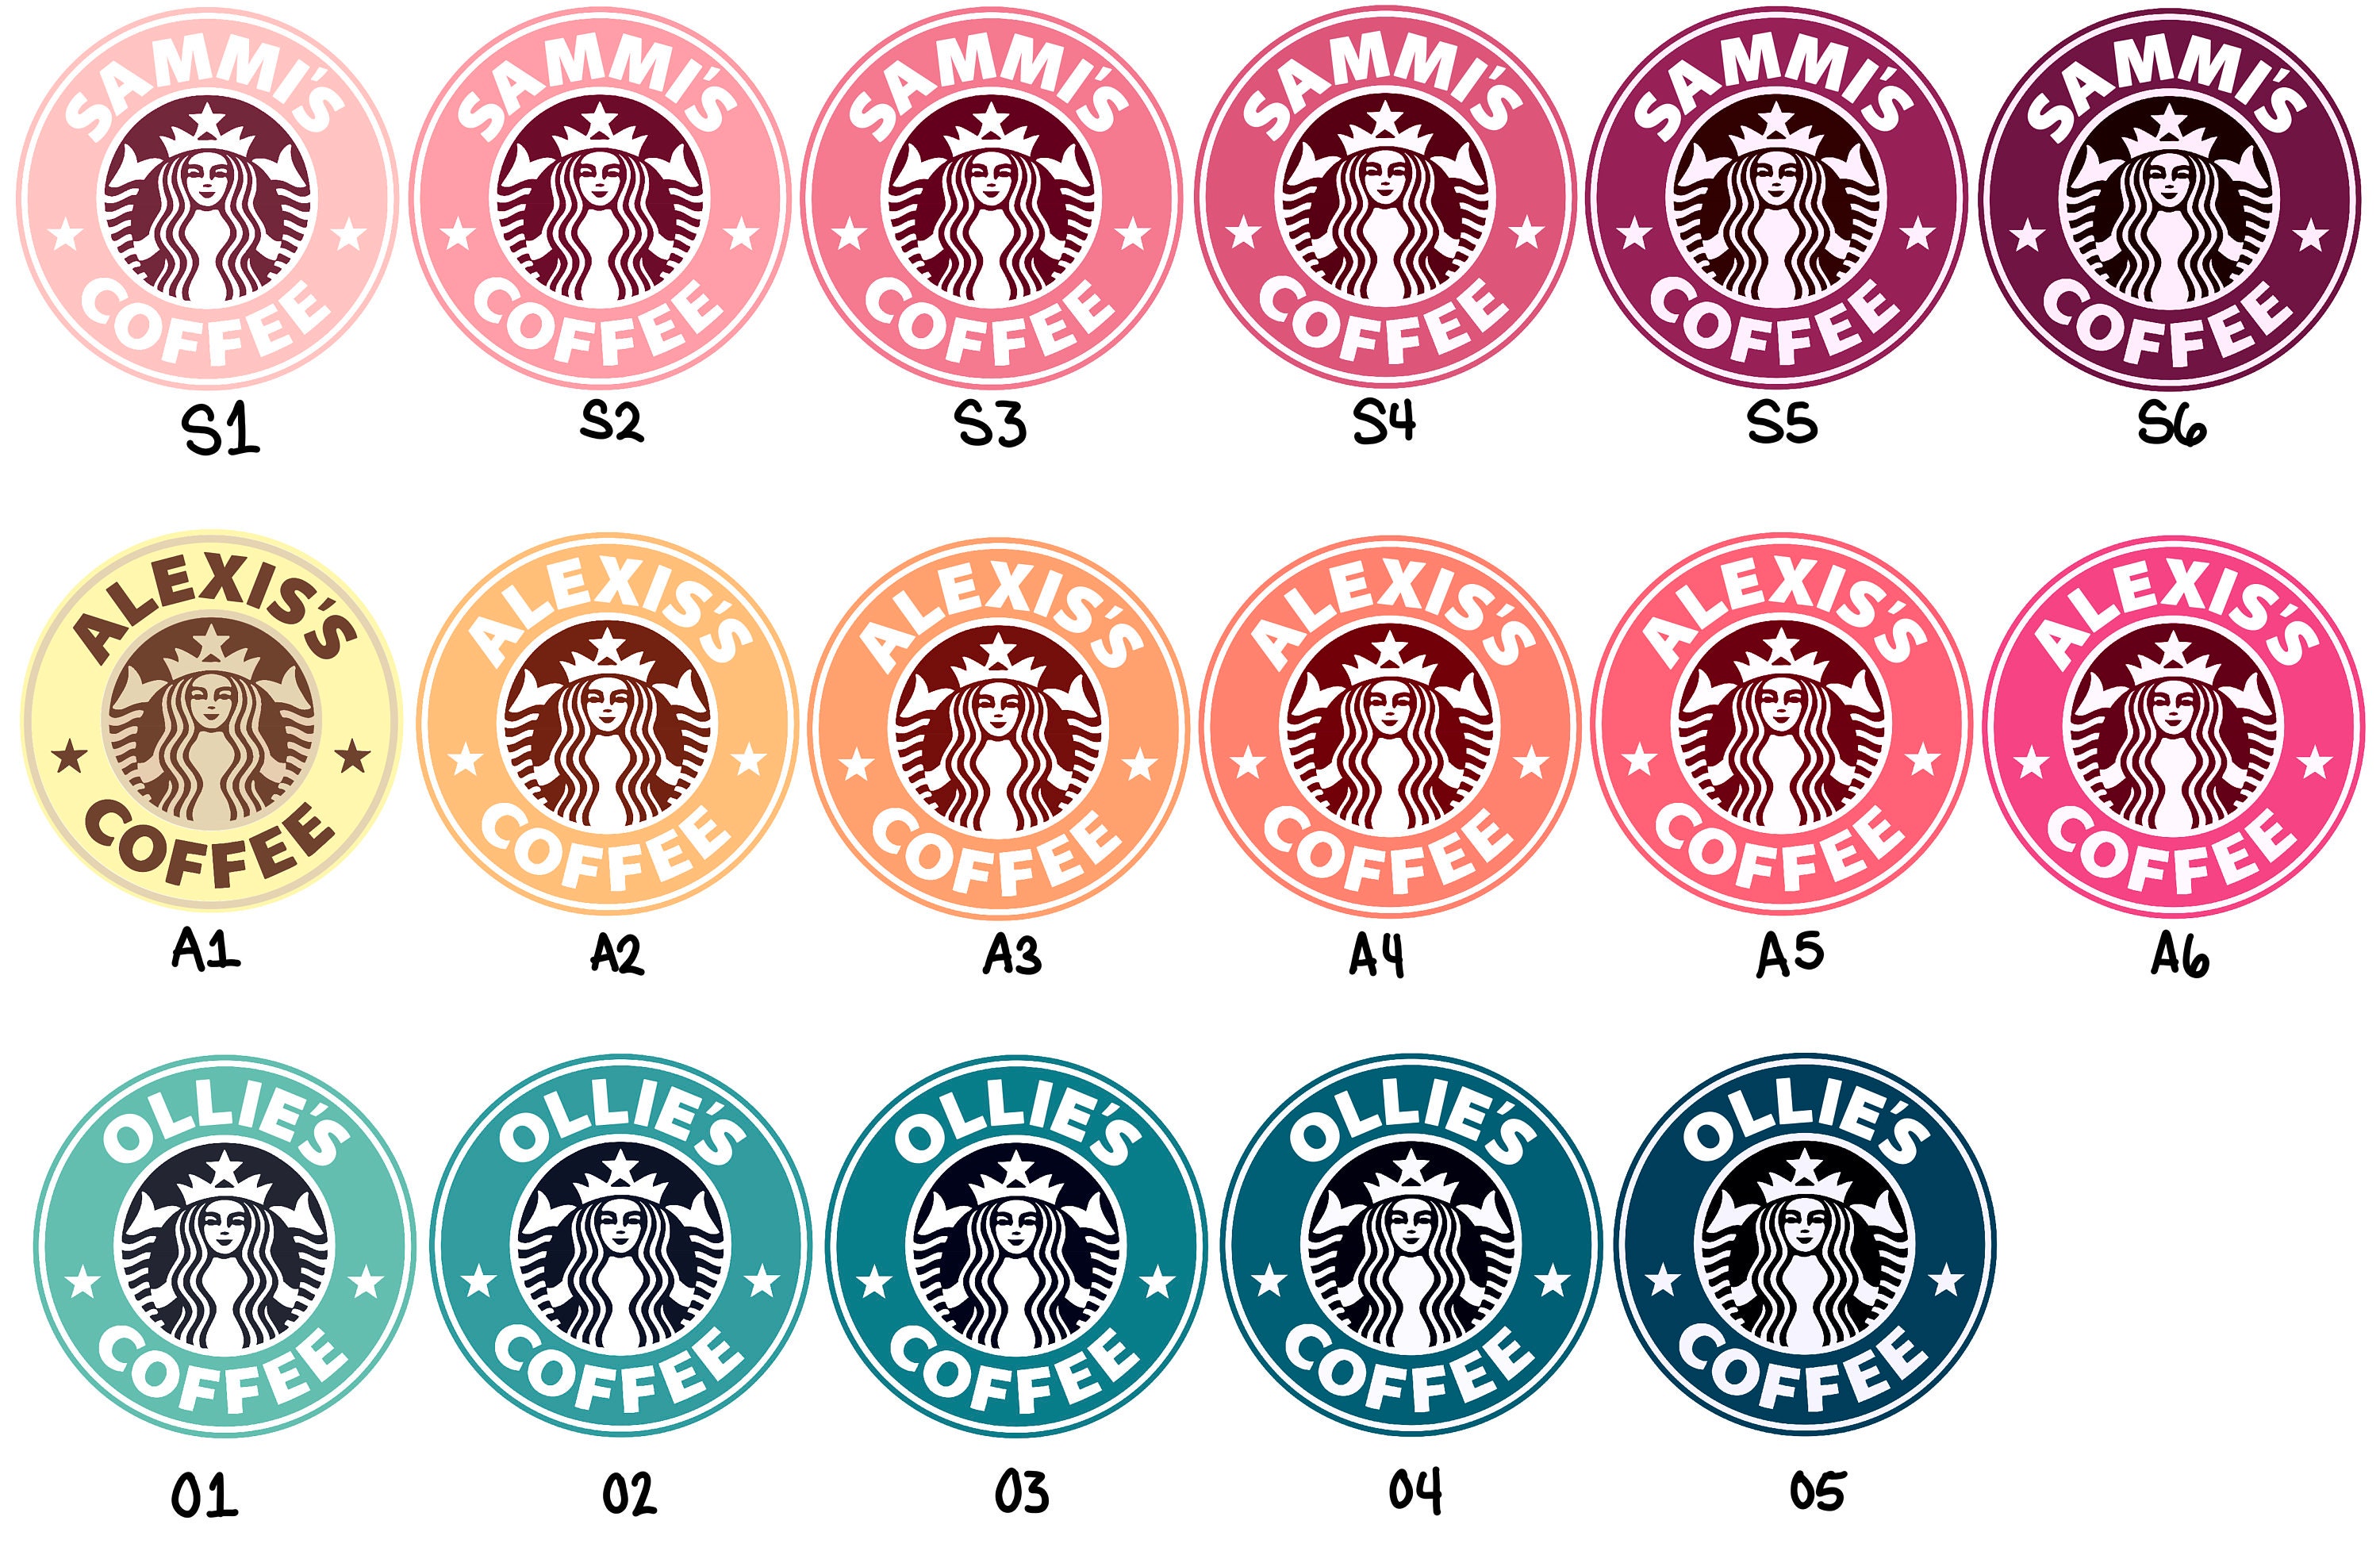 starbucks coffee logo - Pro Sport Stickers